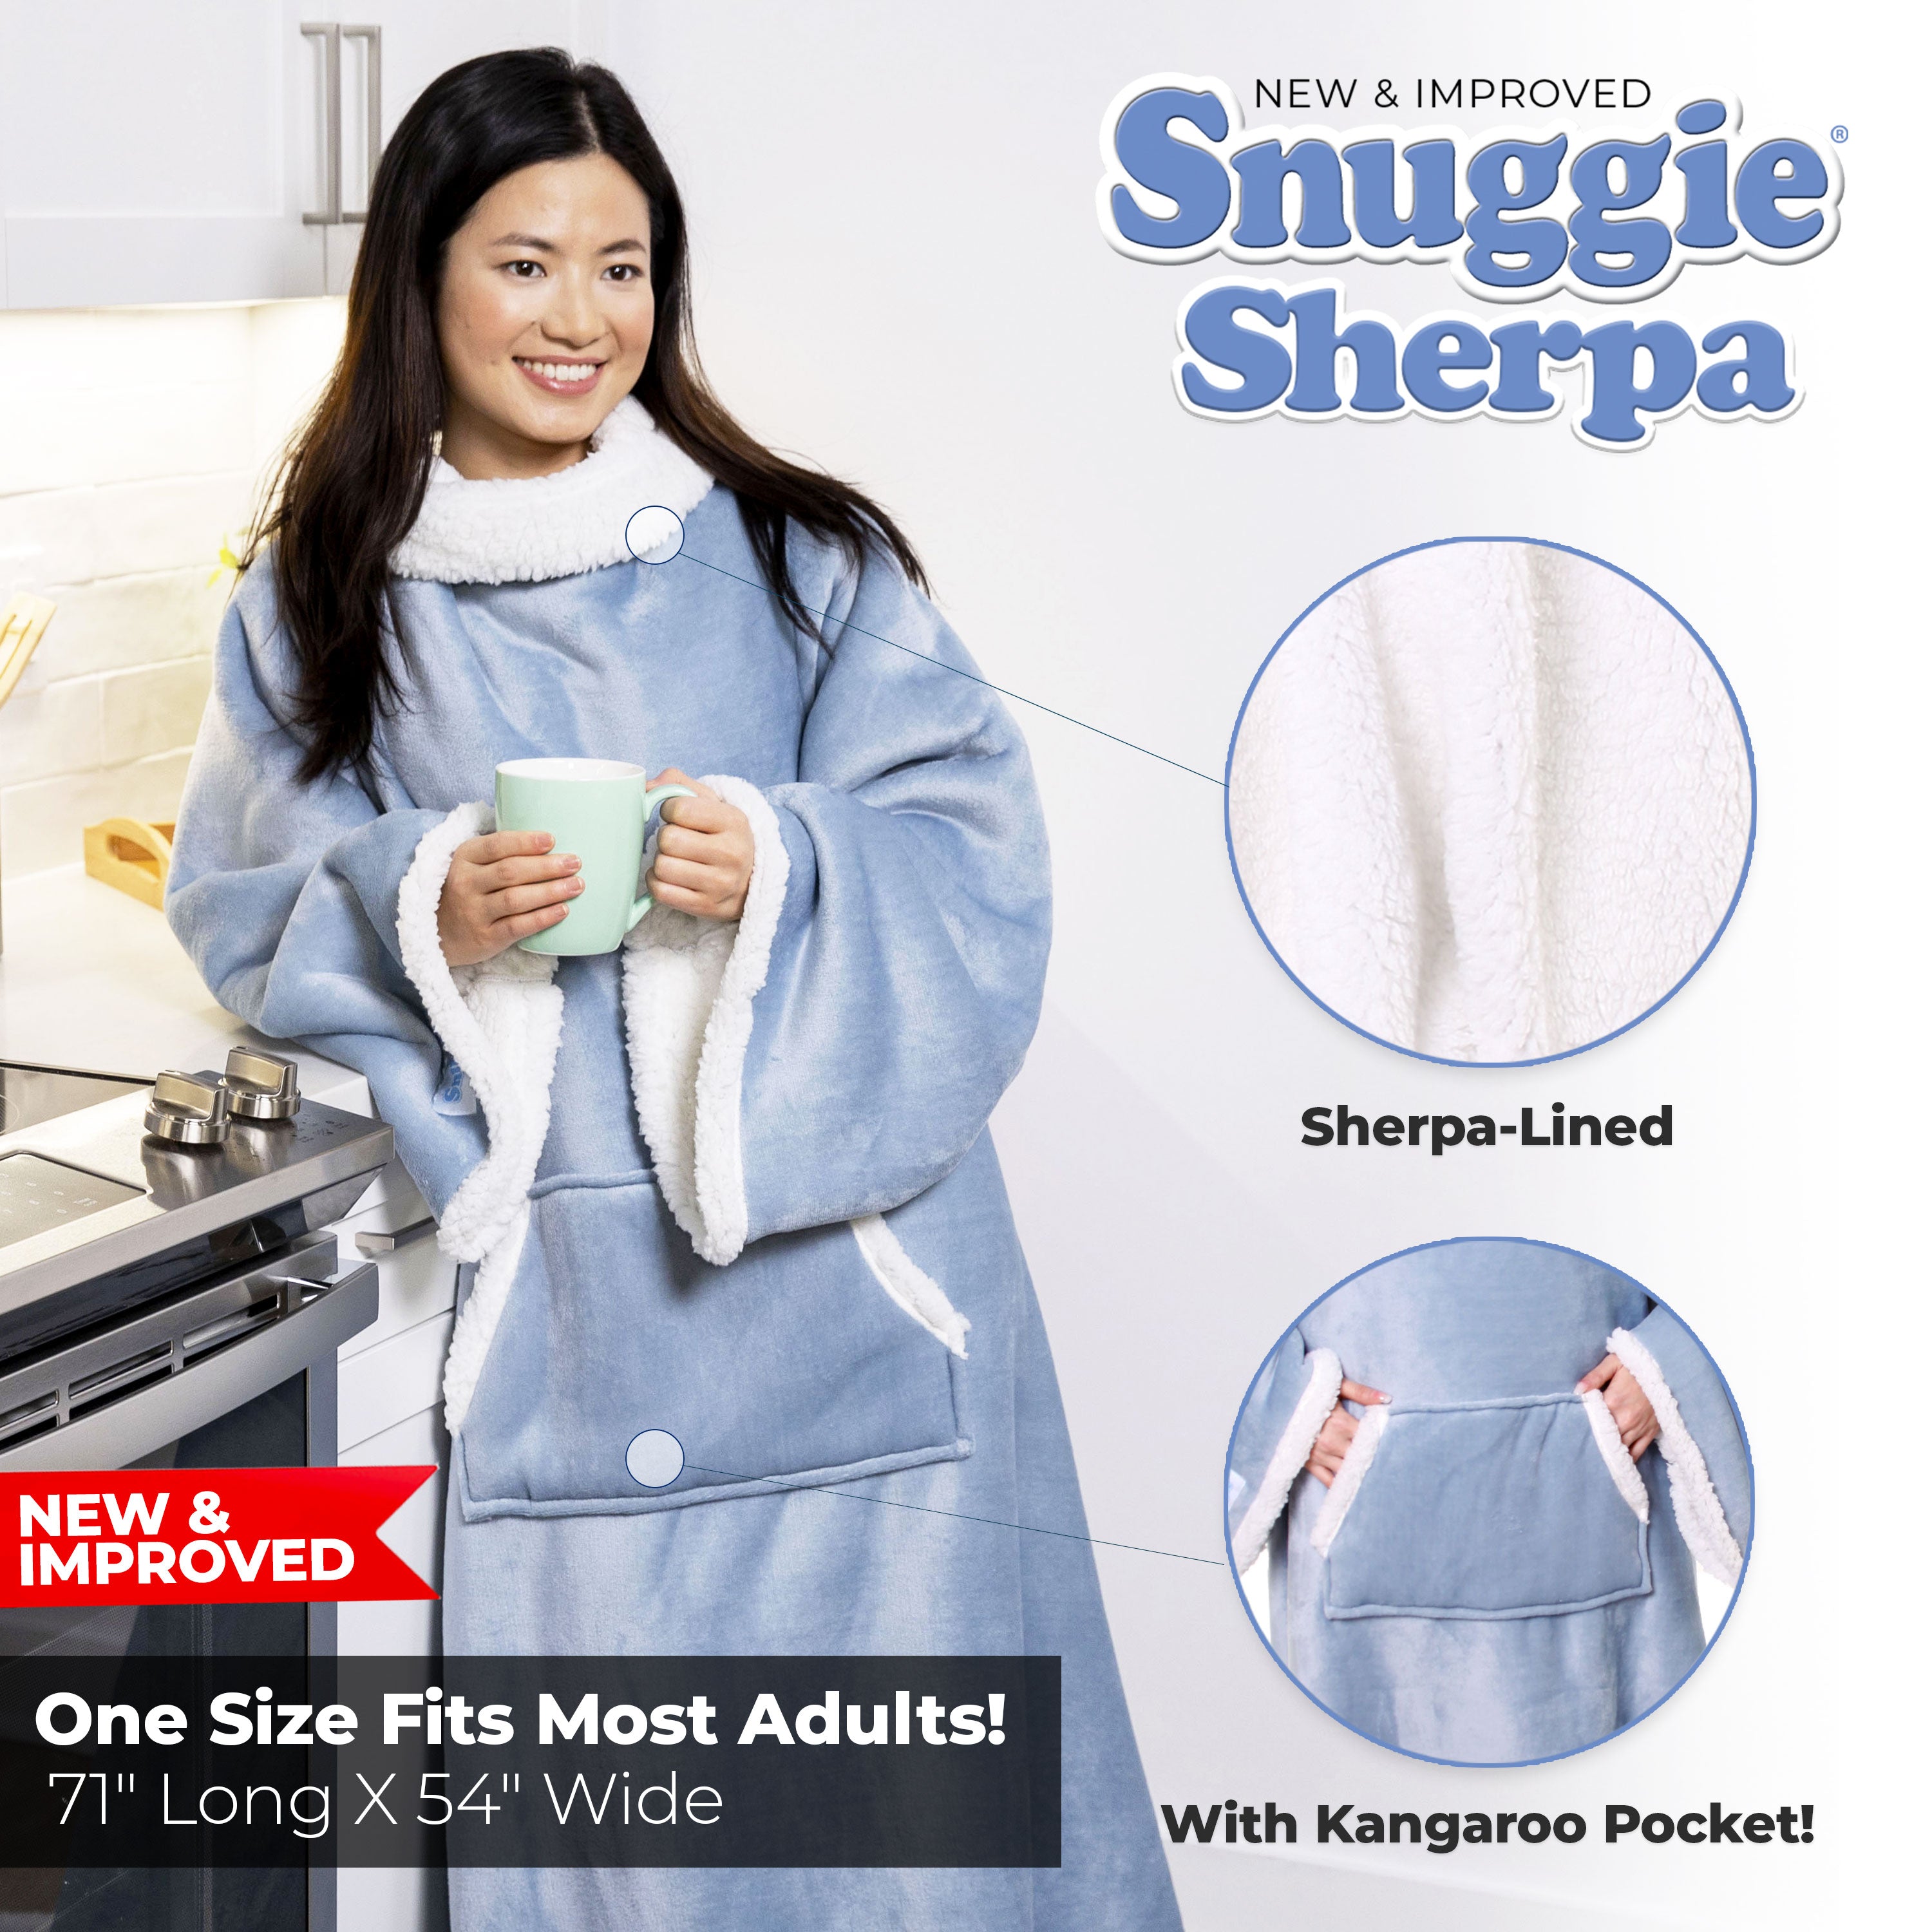 Snuggie Sherpa-The Original Wearable Blanket That Maroc